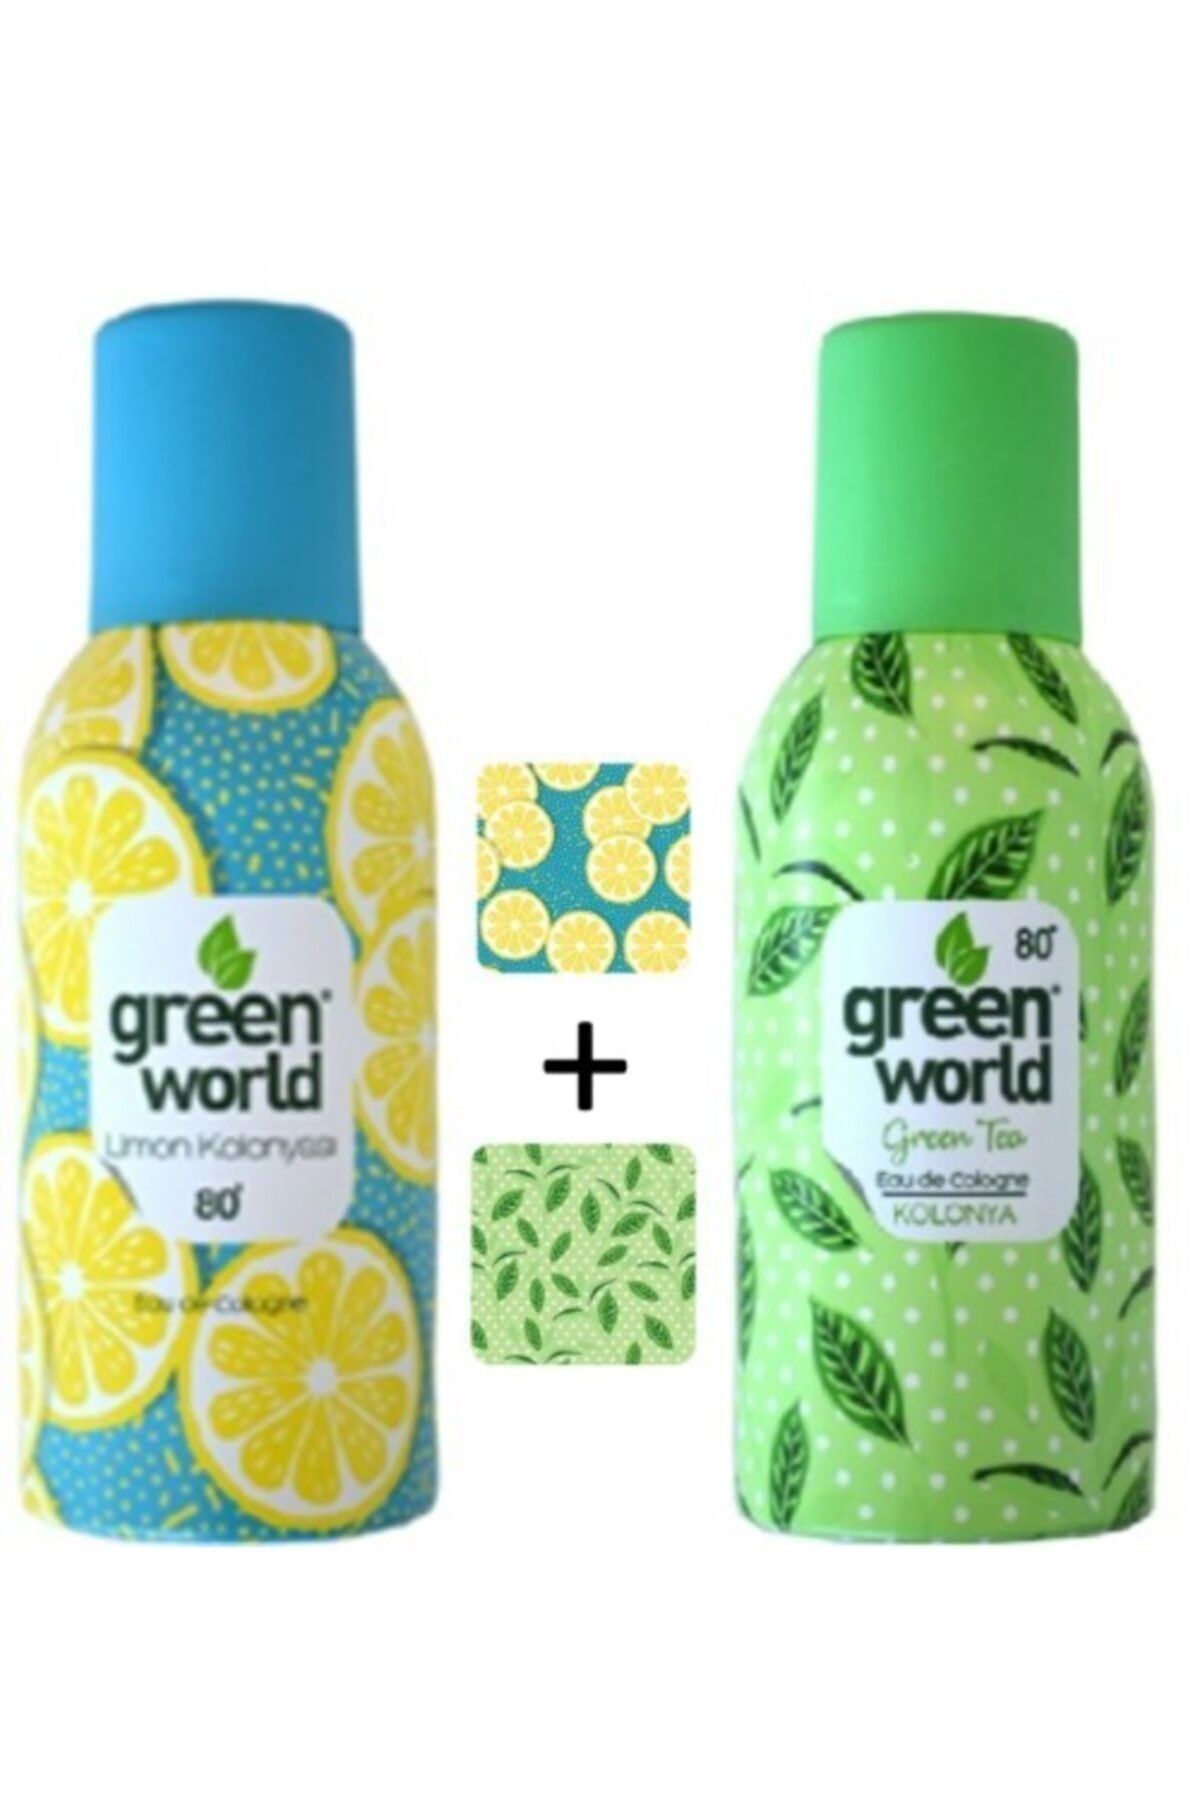 Green World Limon + Yeşil Çay Aerosol Sprey Kolonya 2'li  80 Derece 150 ml x 2 Adet